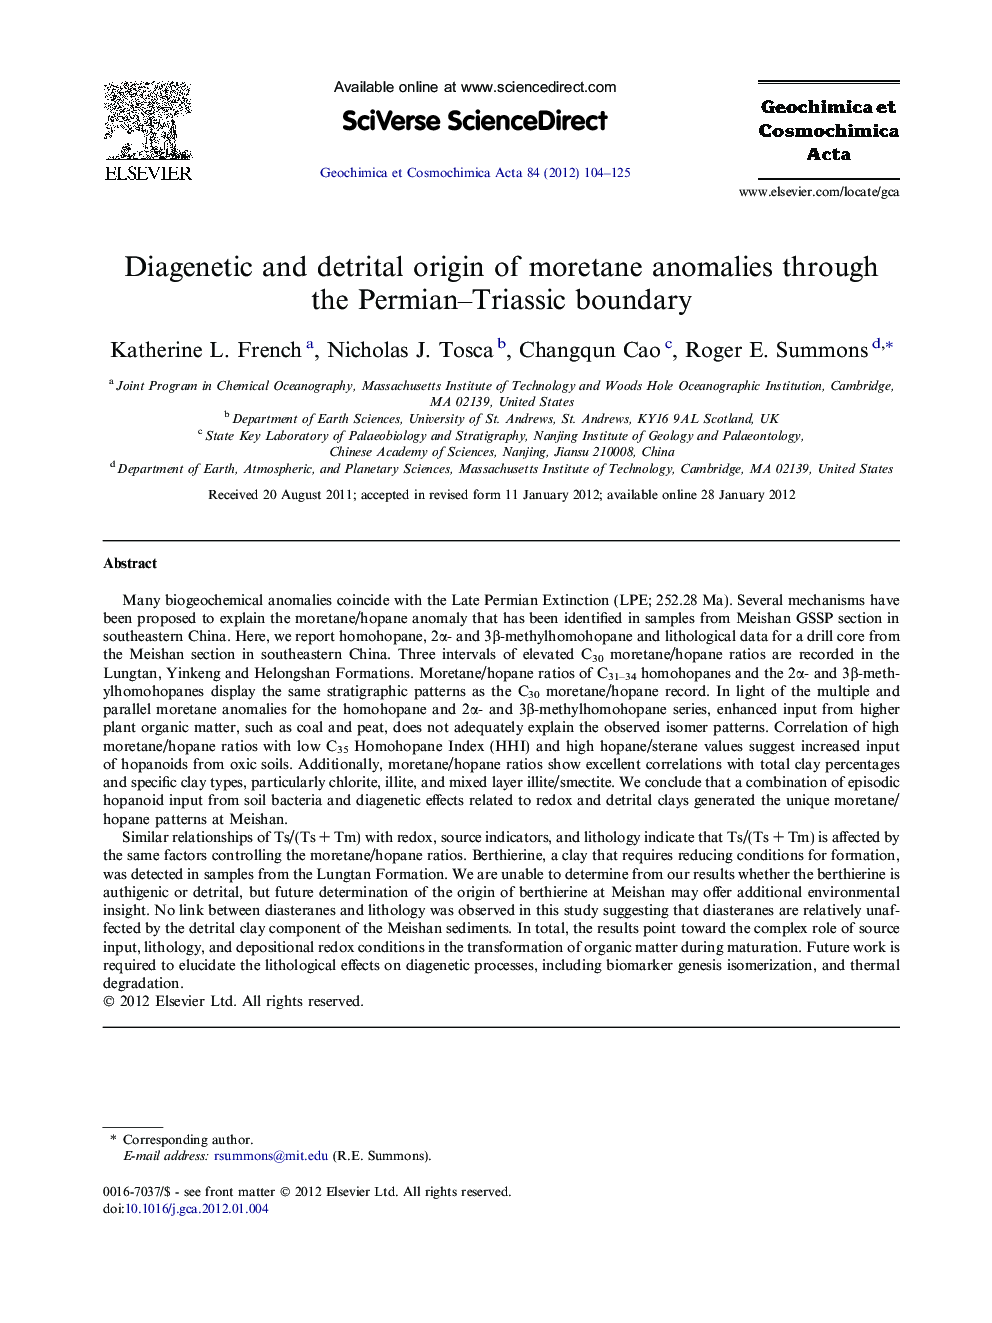 Diagenetic and detrital origin of moretane anomalies through the Permian-Triassic boundary